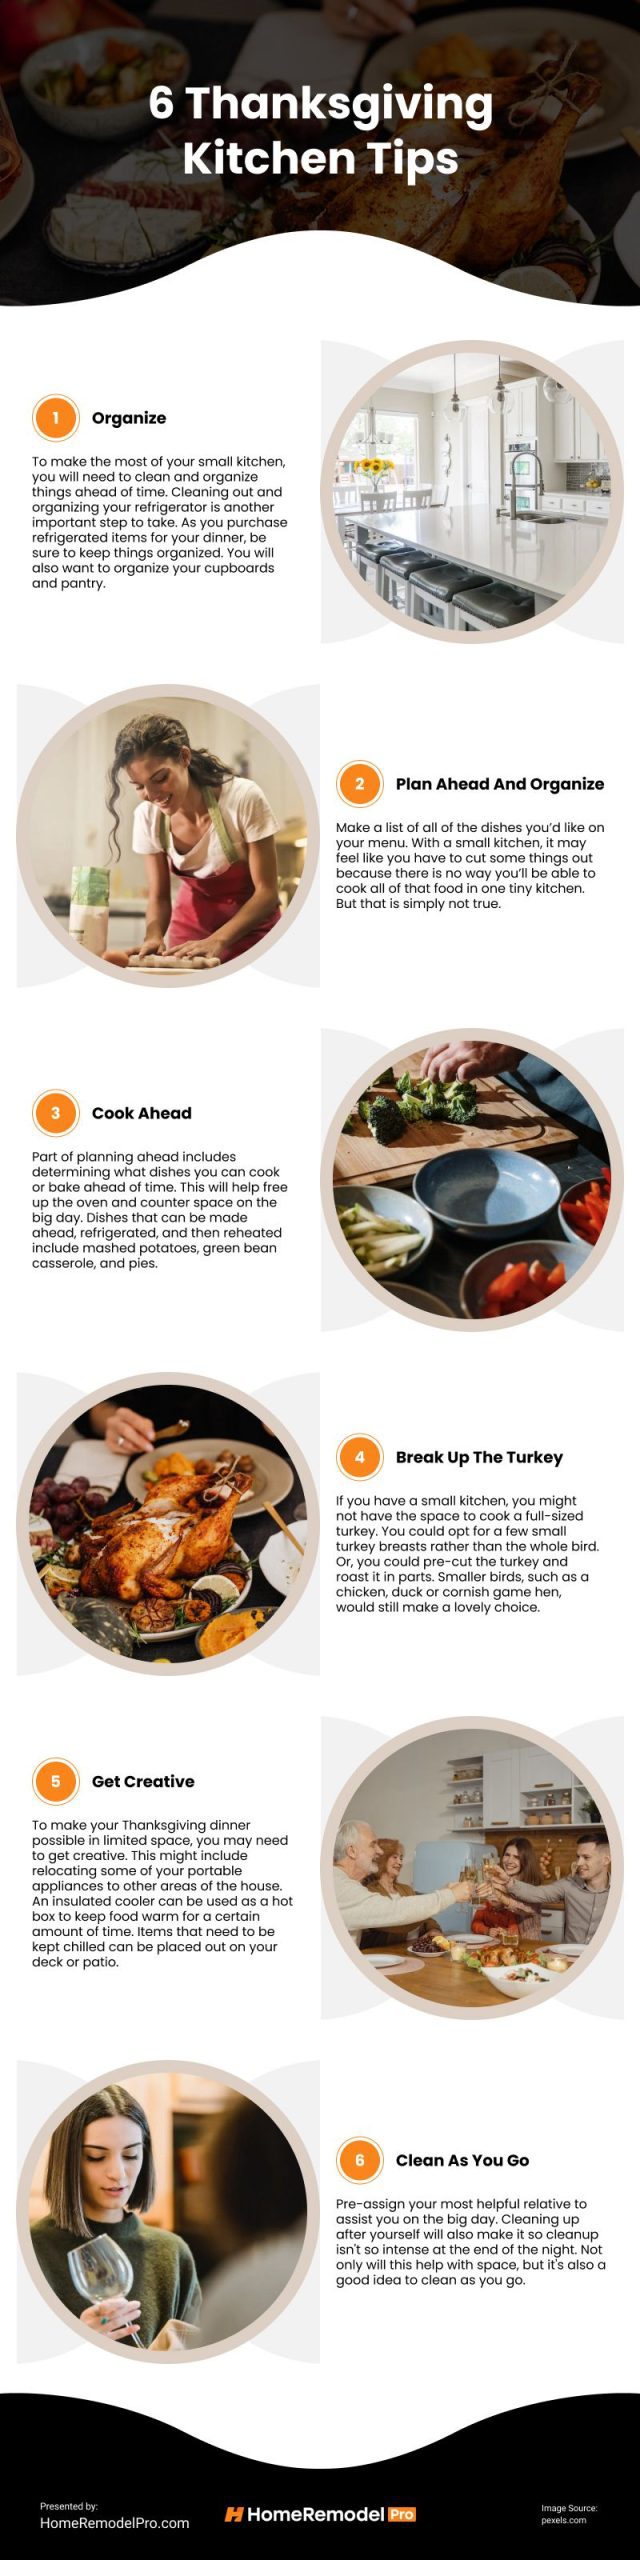 6 Thanksgiving Kitchen Tips Infographic